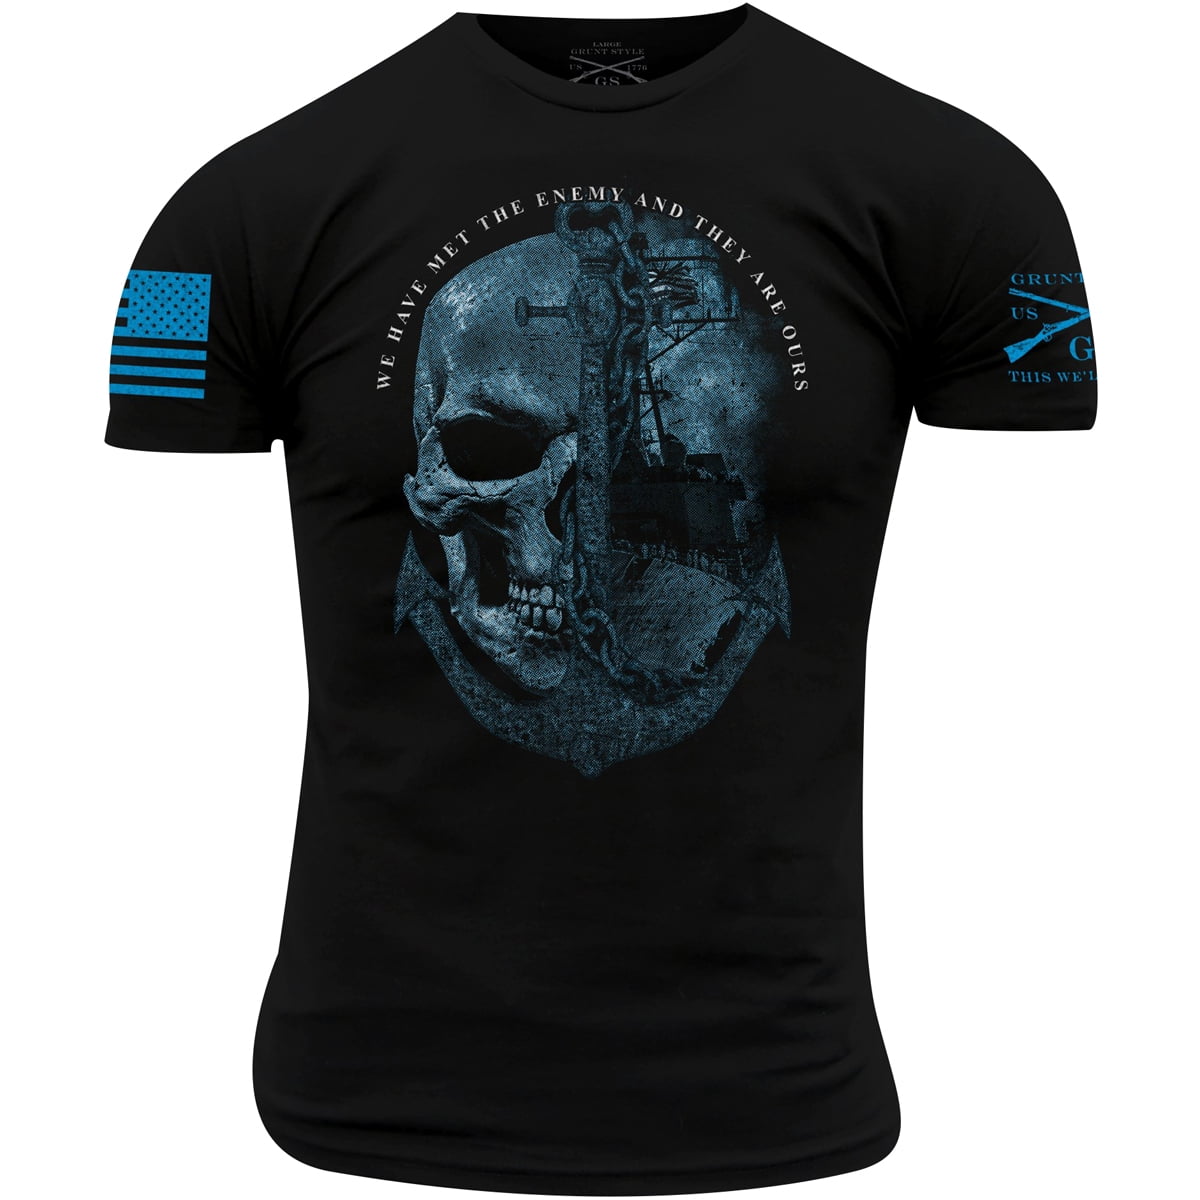 Grunt Style Dad Defined - Men's T-Shirt (Black, 4X-Large